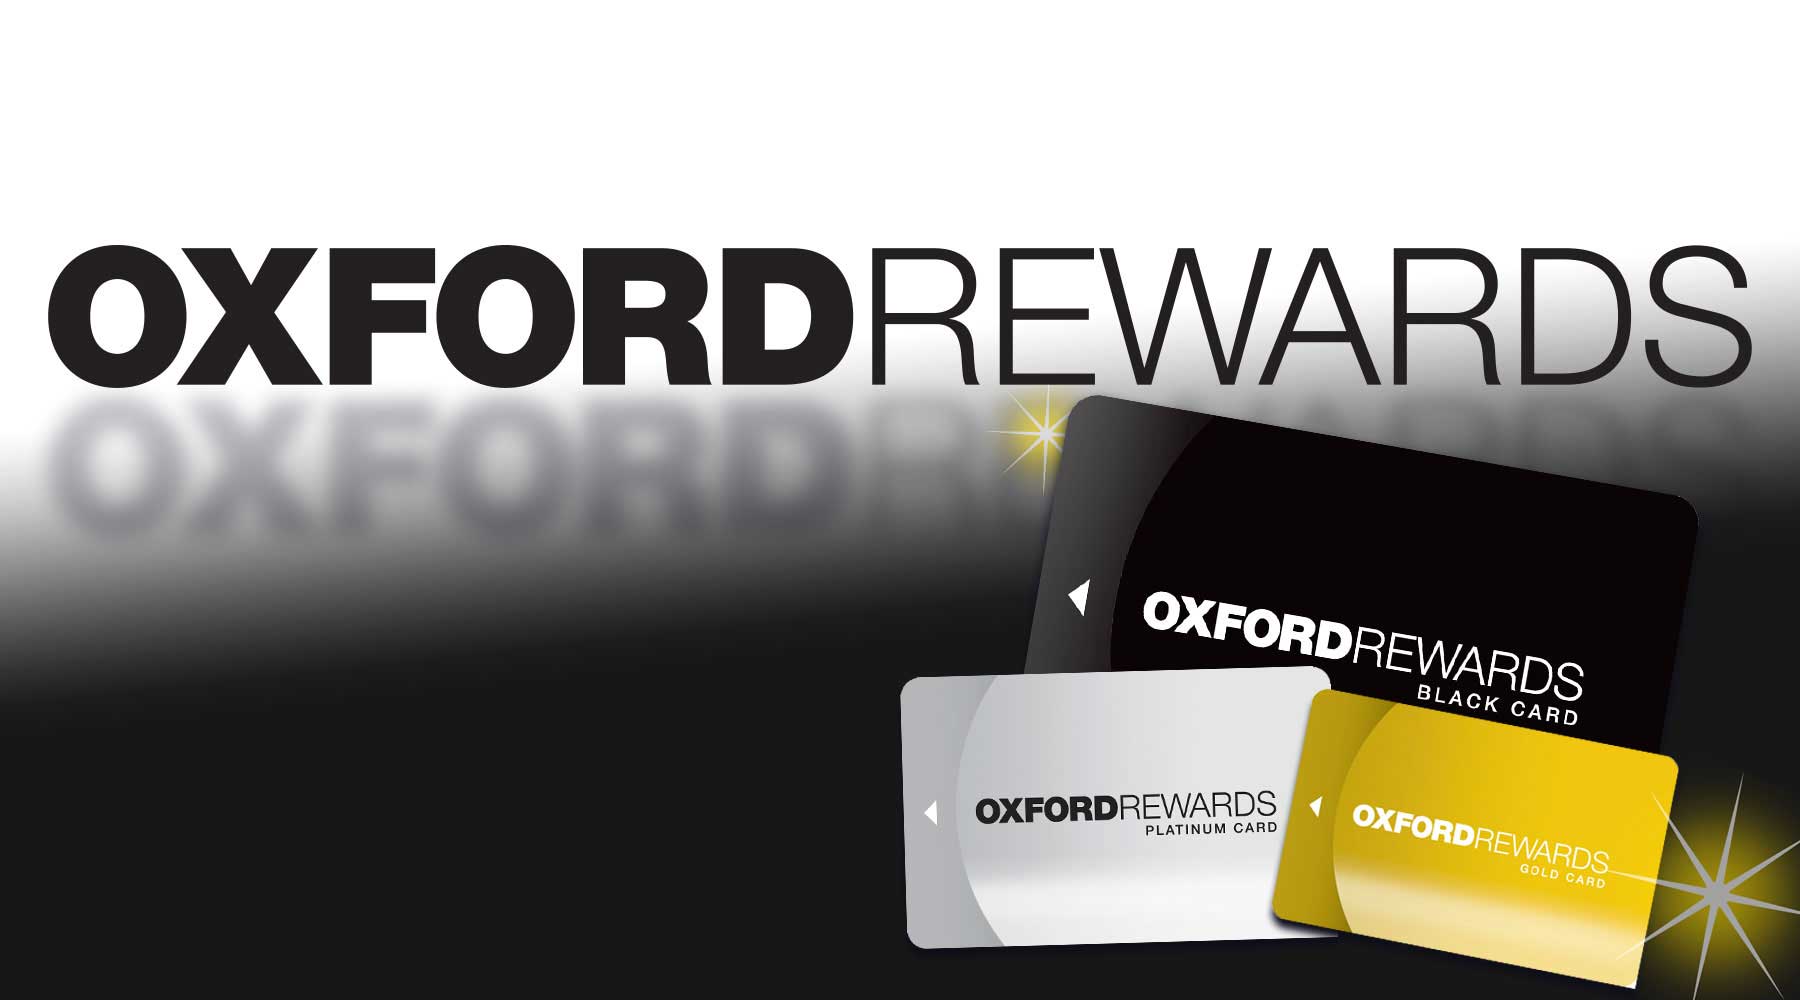 Oxford Rewards Players Club